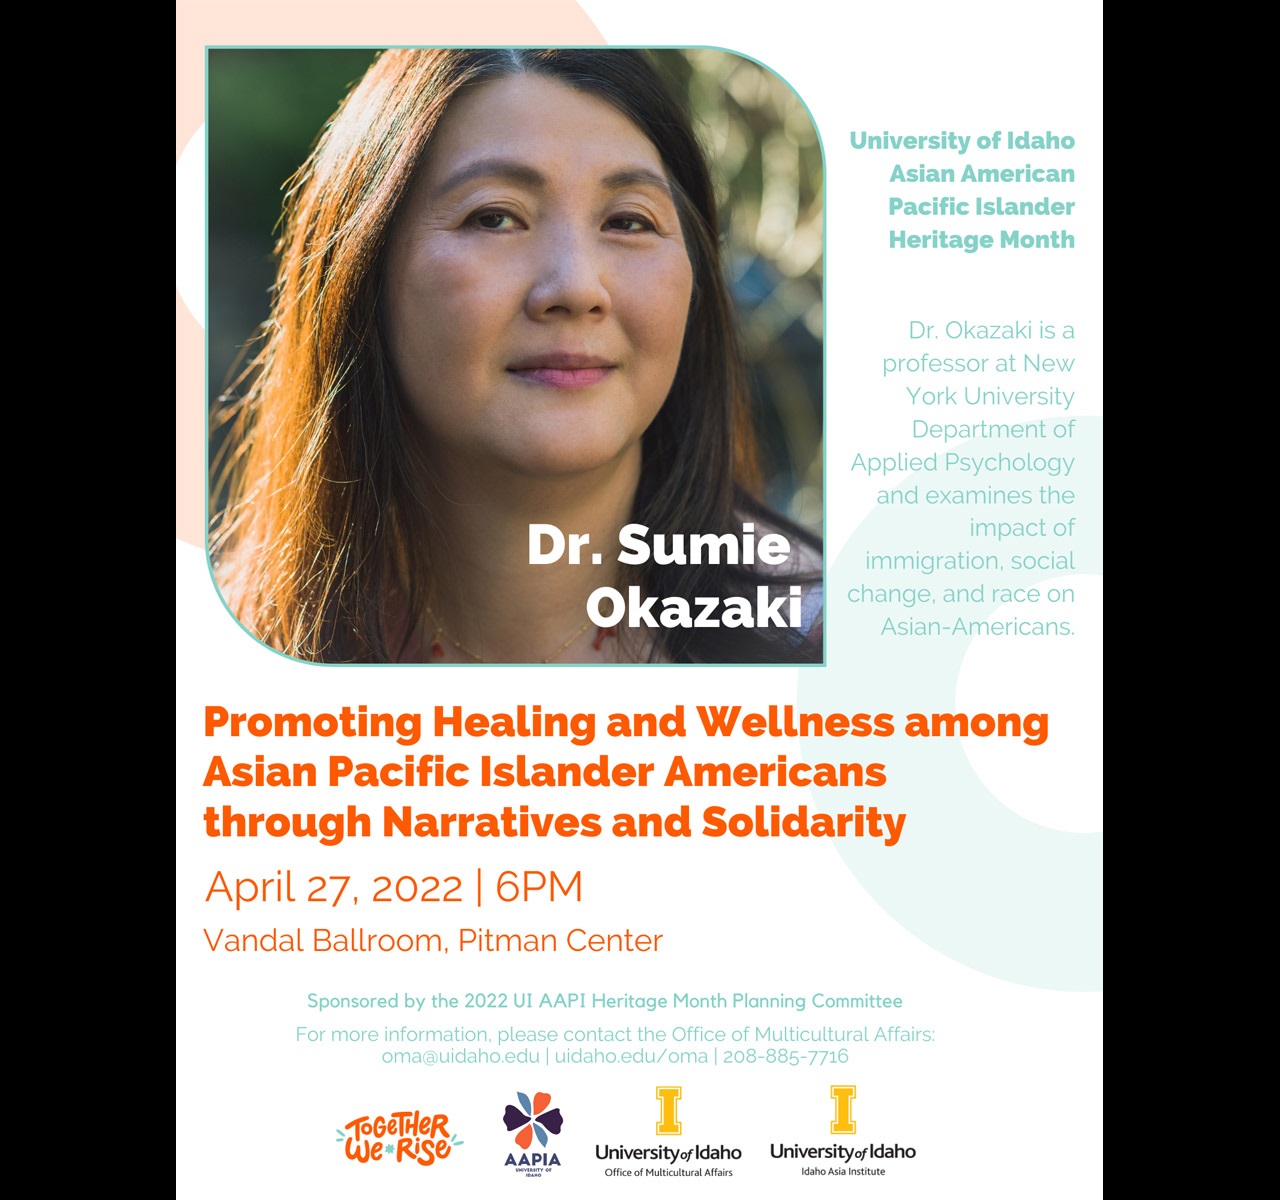 AAPI Heritage Month - Dr. Sumie Okazaki